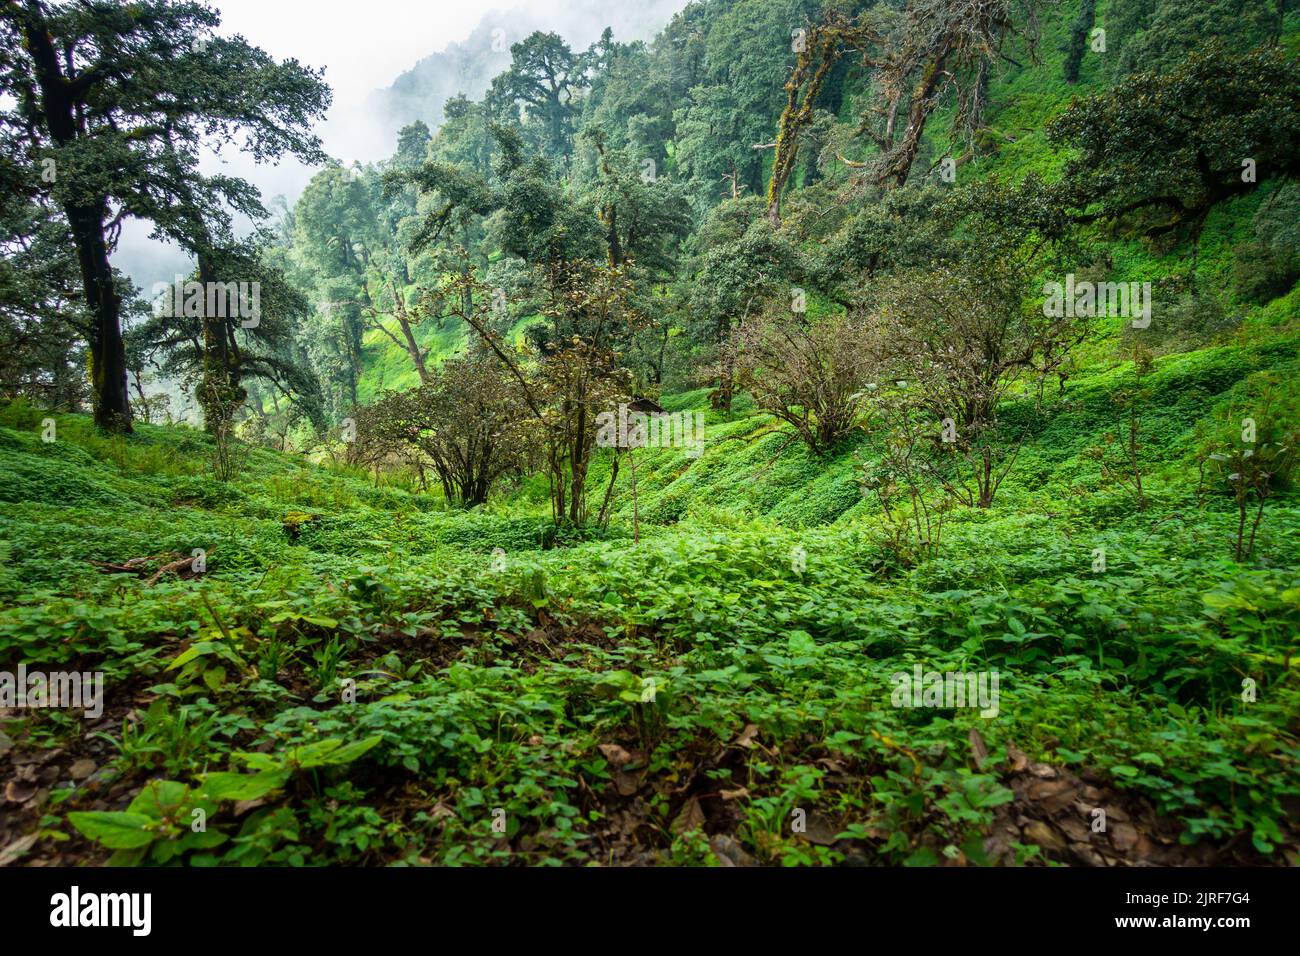 A Himalayan mountain ridge with native herbs and shrubs and trees. Uttarakhand India. Stock Photo